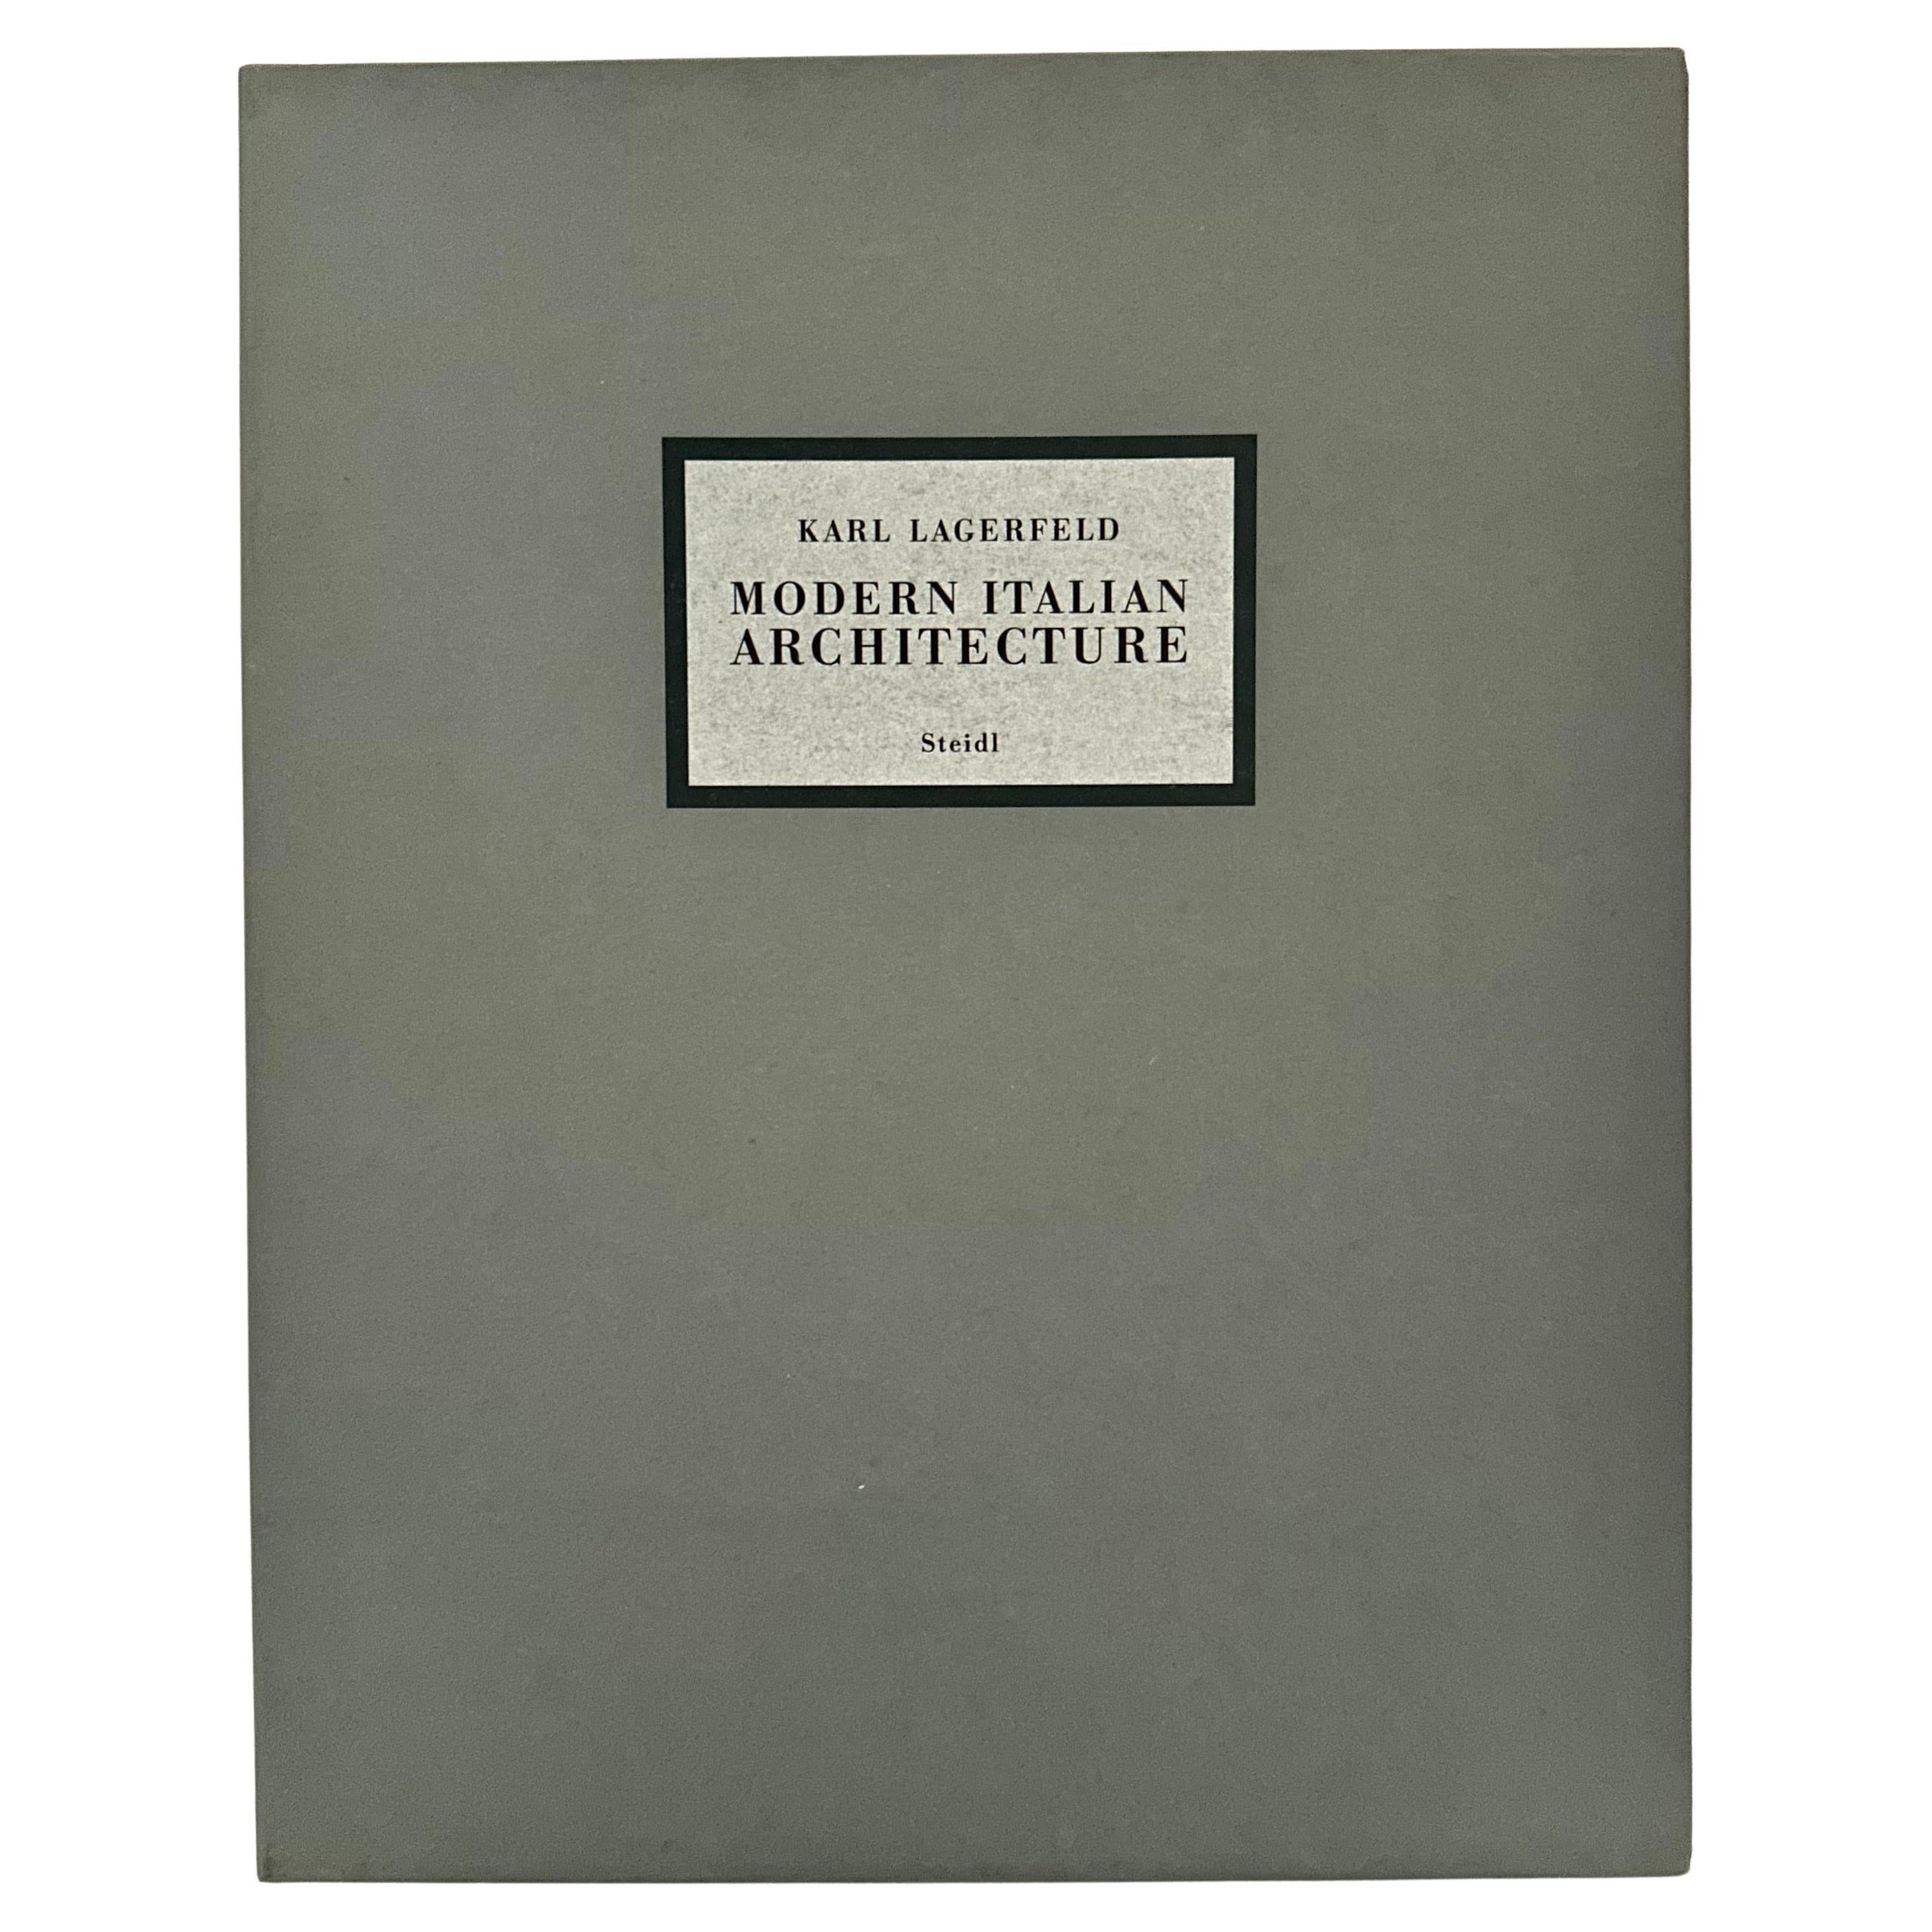 Modern Italian Architecture - Karl Lagerfeld - 1998 For Sale